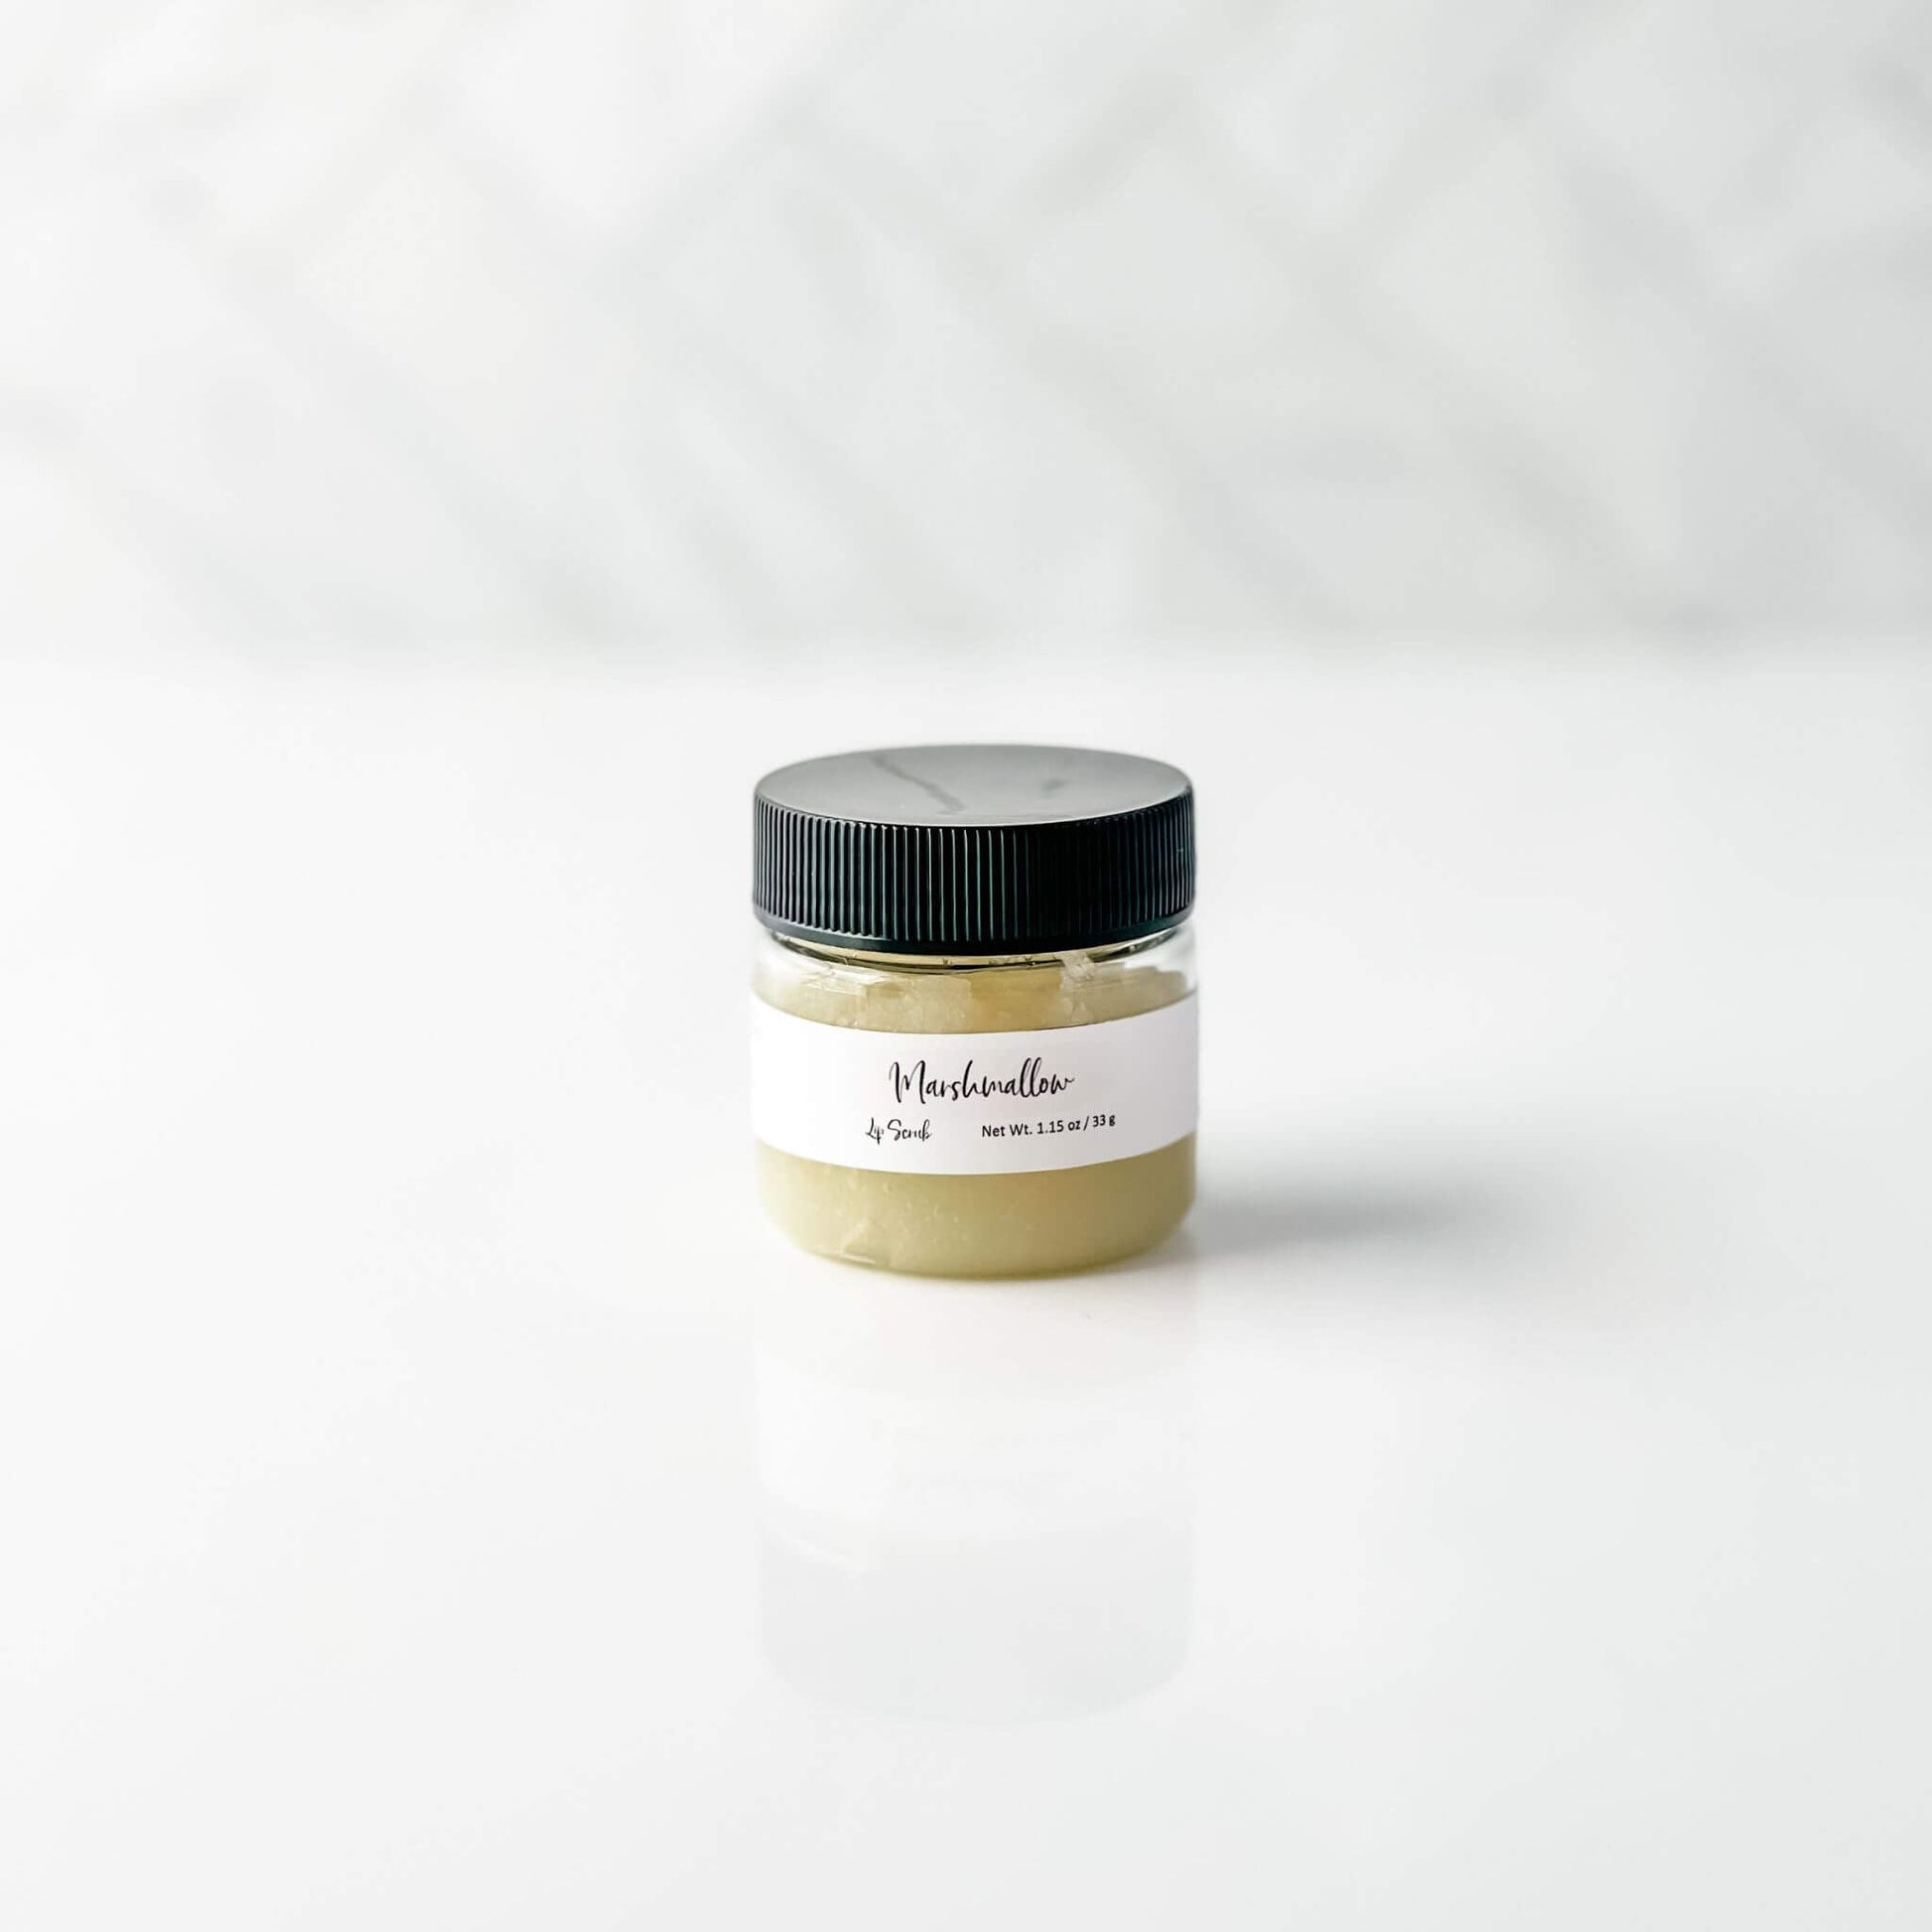 Lip Scrub 1 oz jar Marshmallow flavor (color natural)